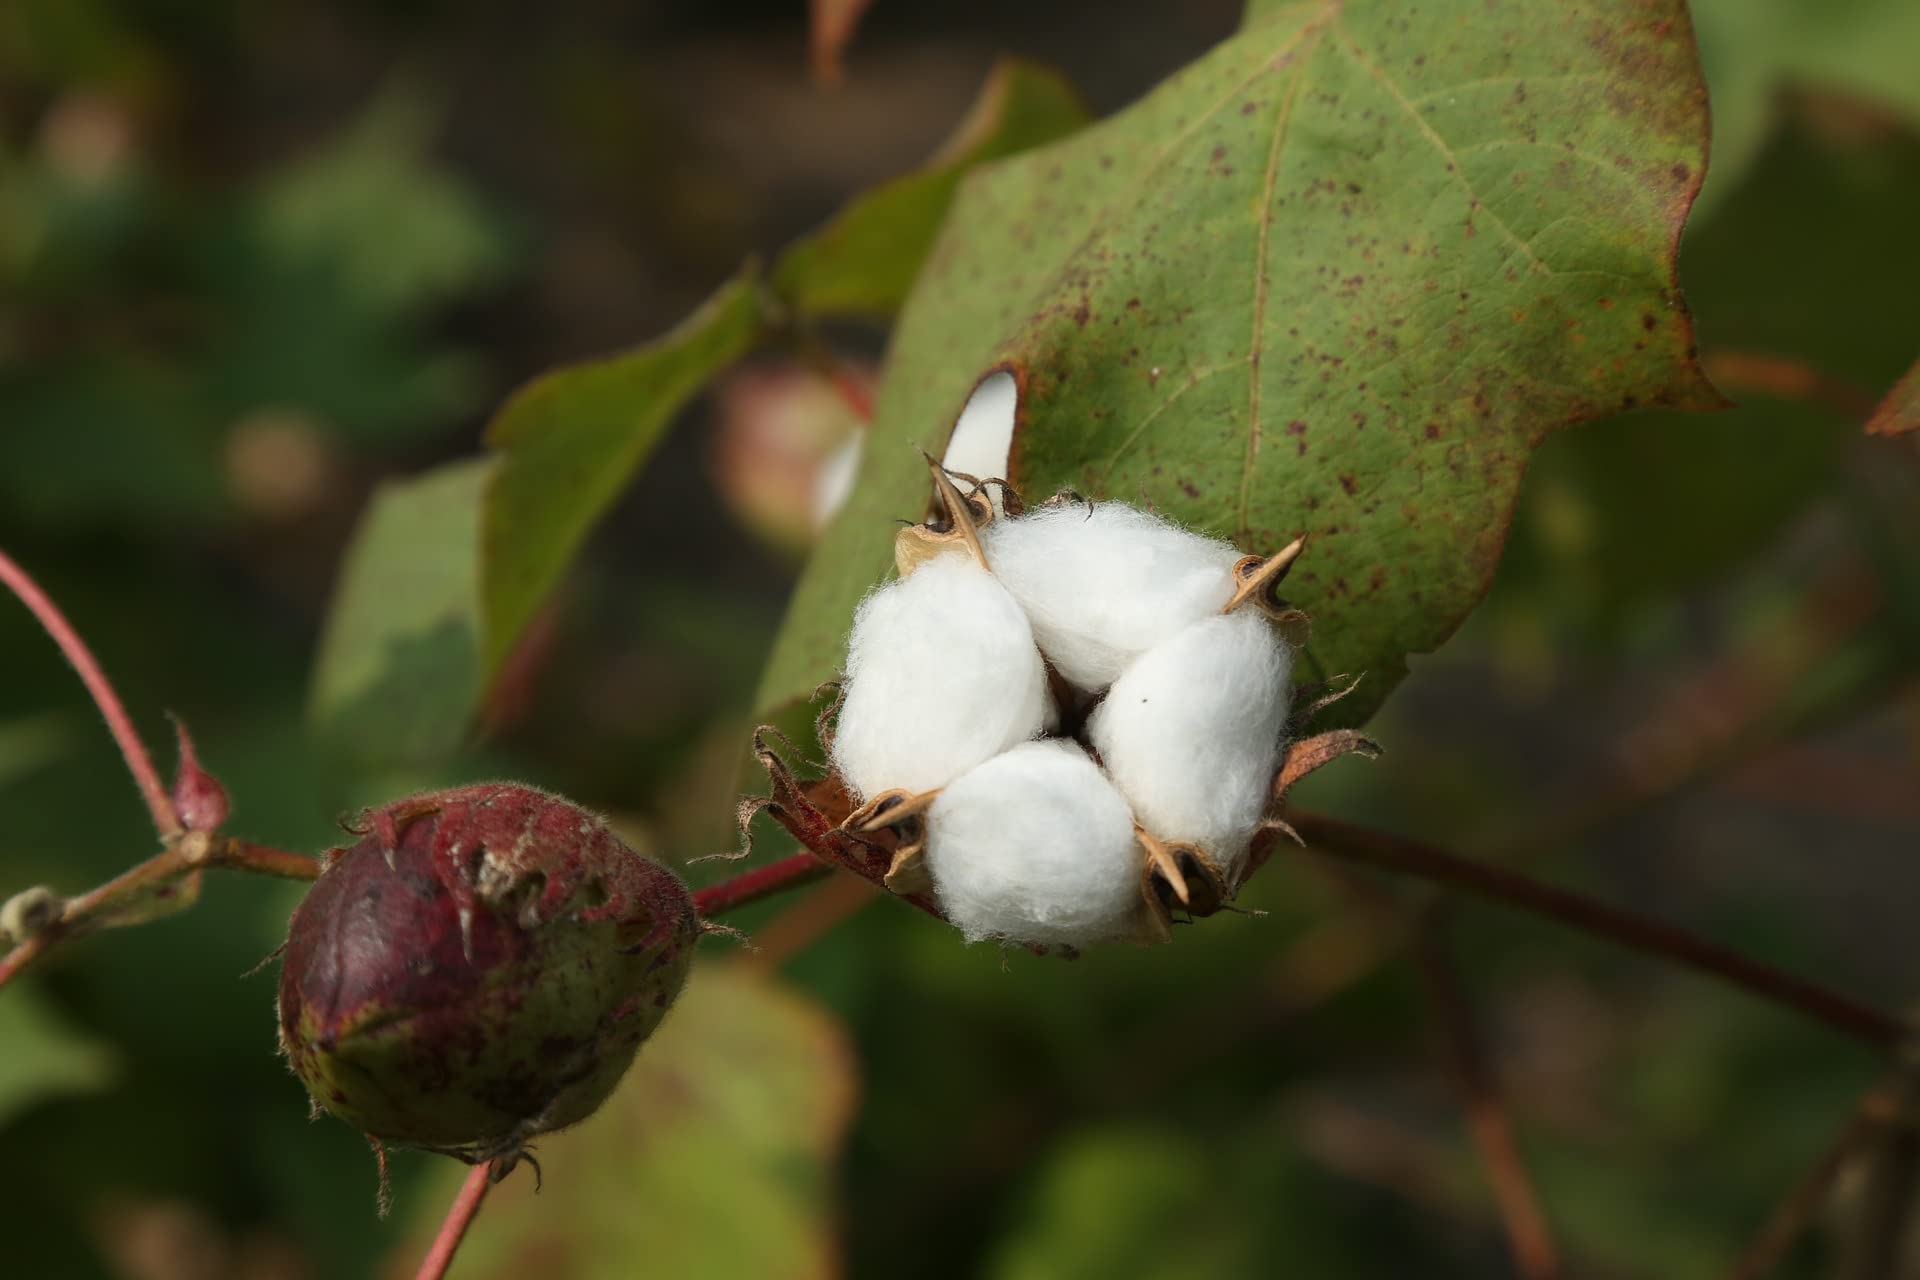 MRC Brand Cotton Seeds Non-GMO, untreated 20+ Cotton Seeds